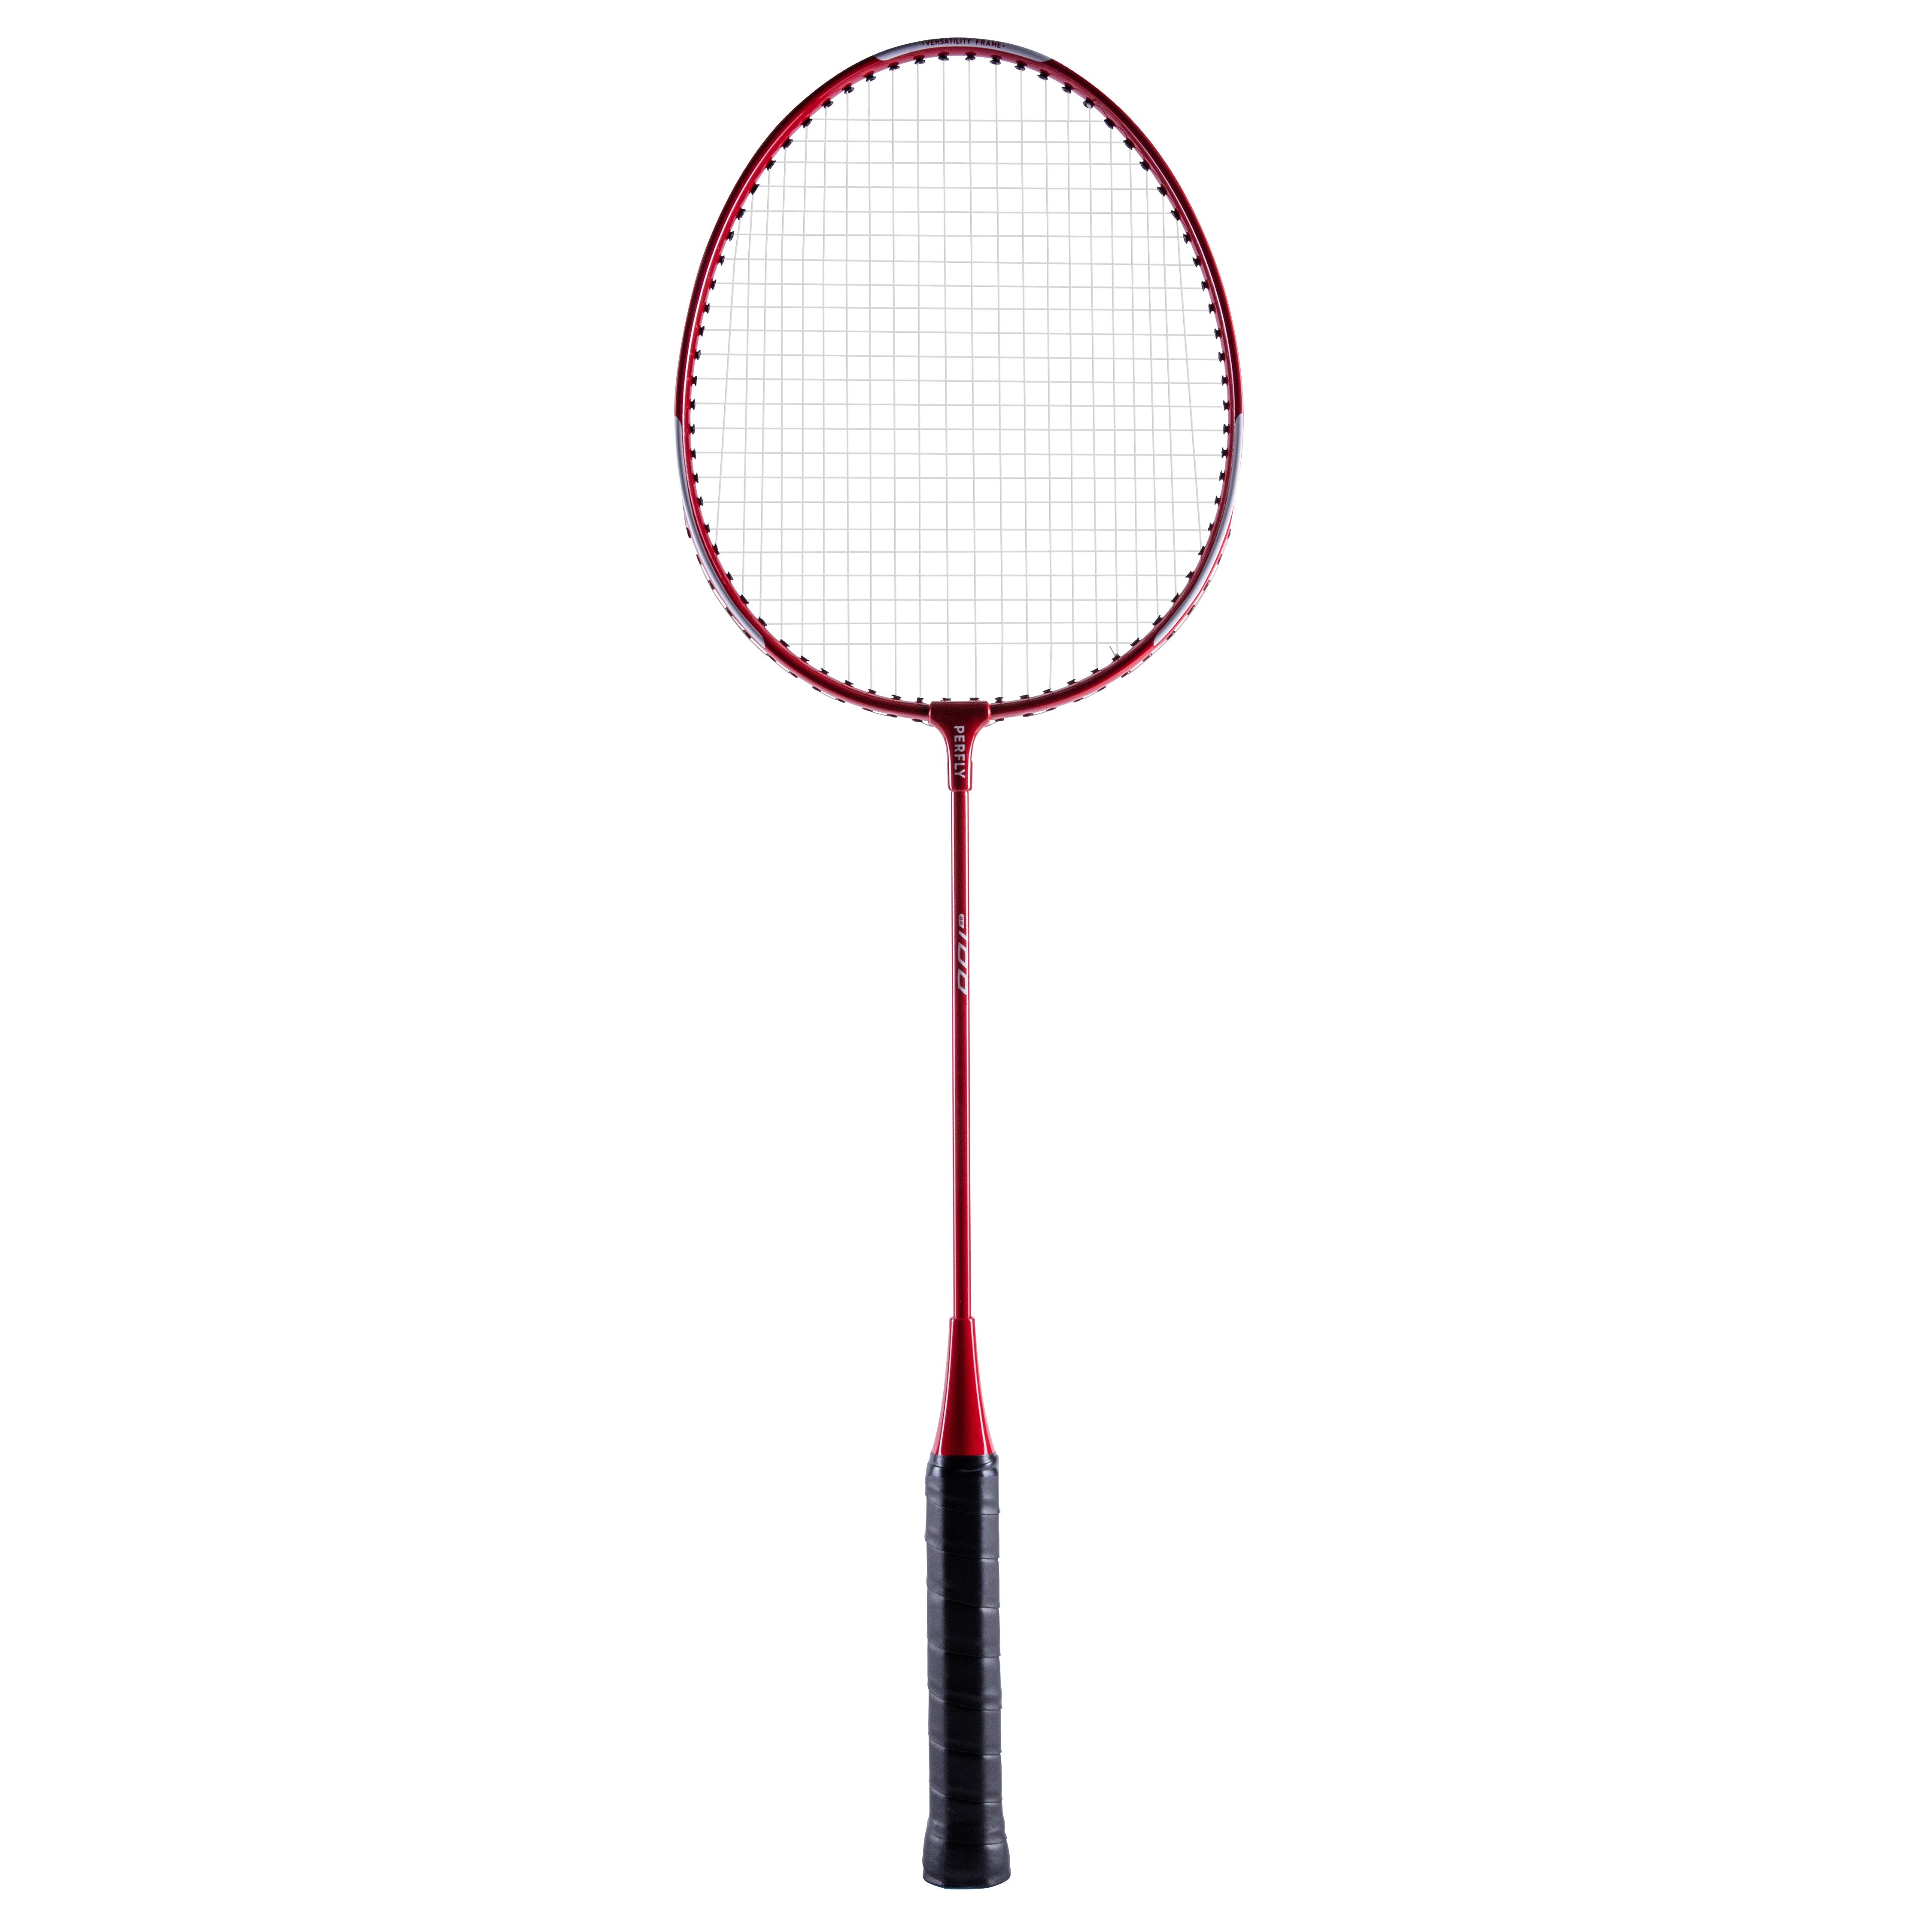 Buy Adult Badminton Racket Br100 Red Online Decathlon